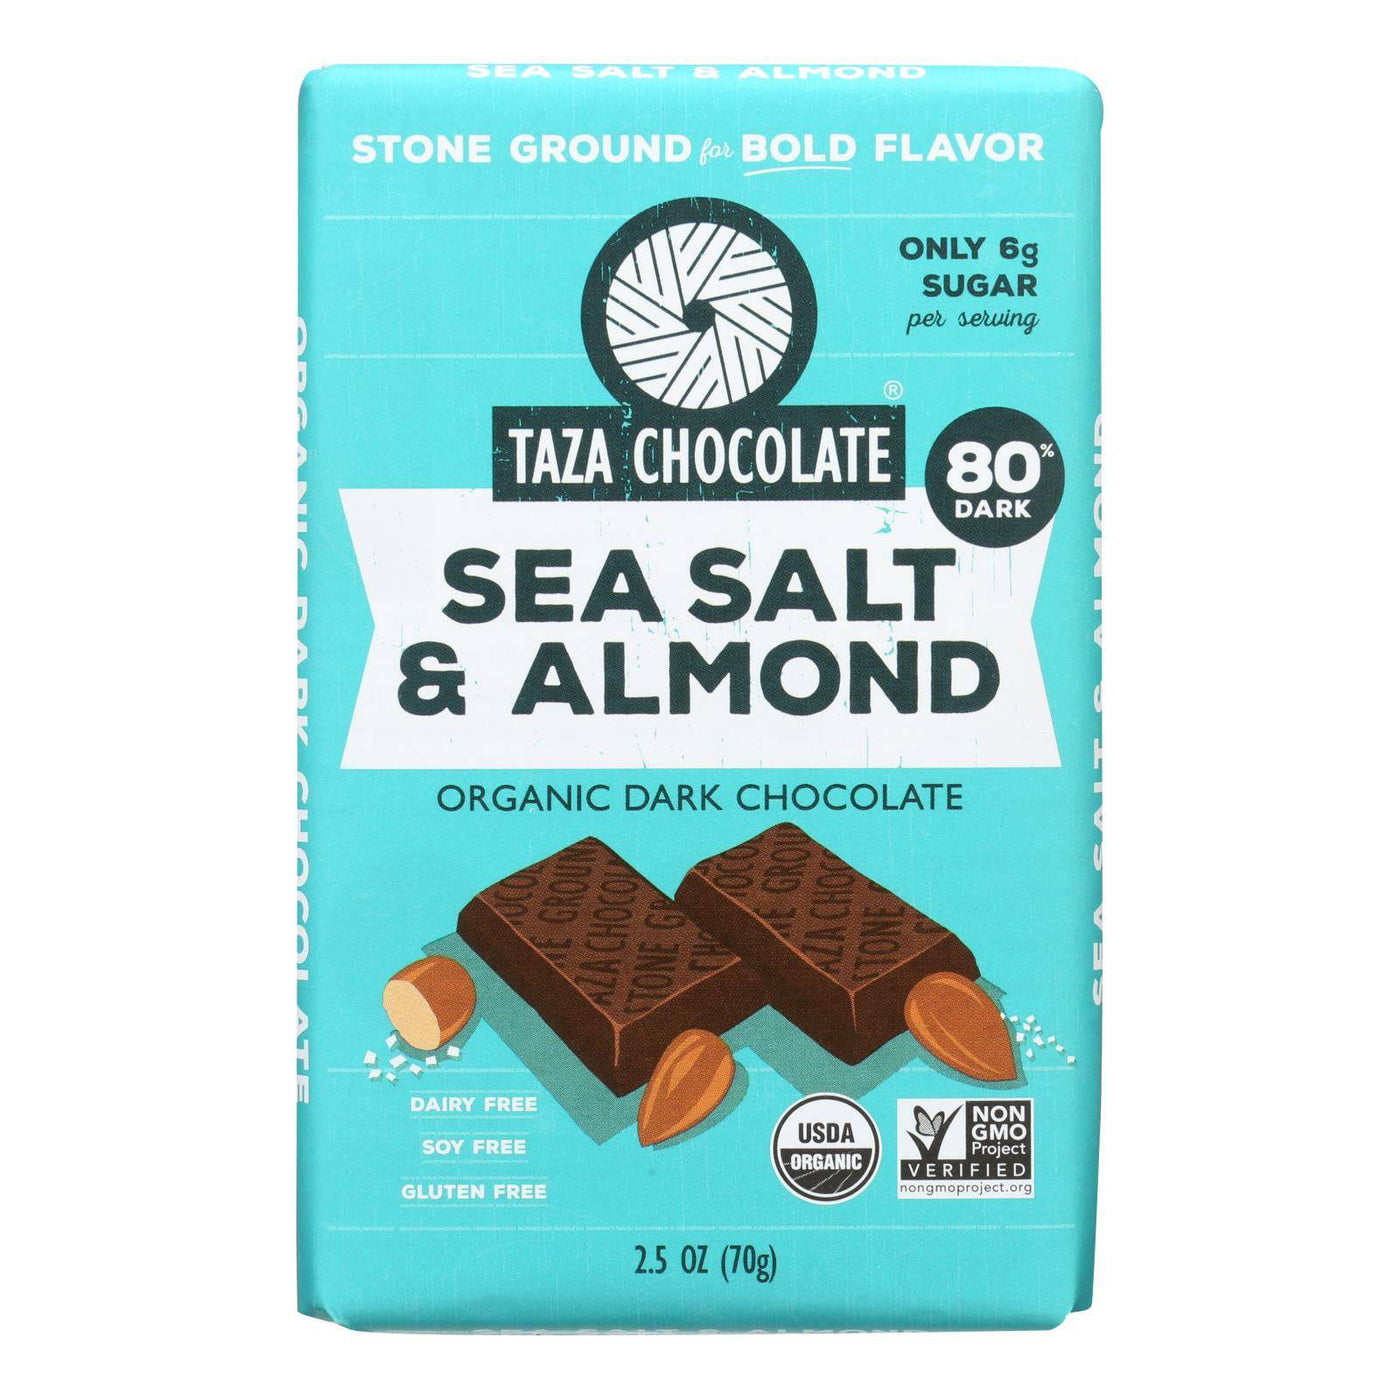 Taza Chocolate Stone Ground Organic Dark Chocolate Bar - Sea Salt And Almond - Case Of 10 - 2.5 Oz. | OnlyNaturals.us